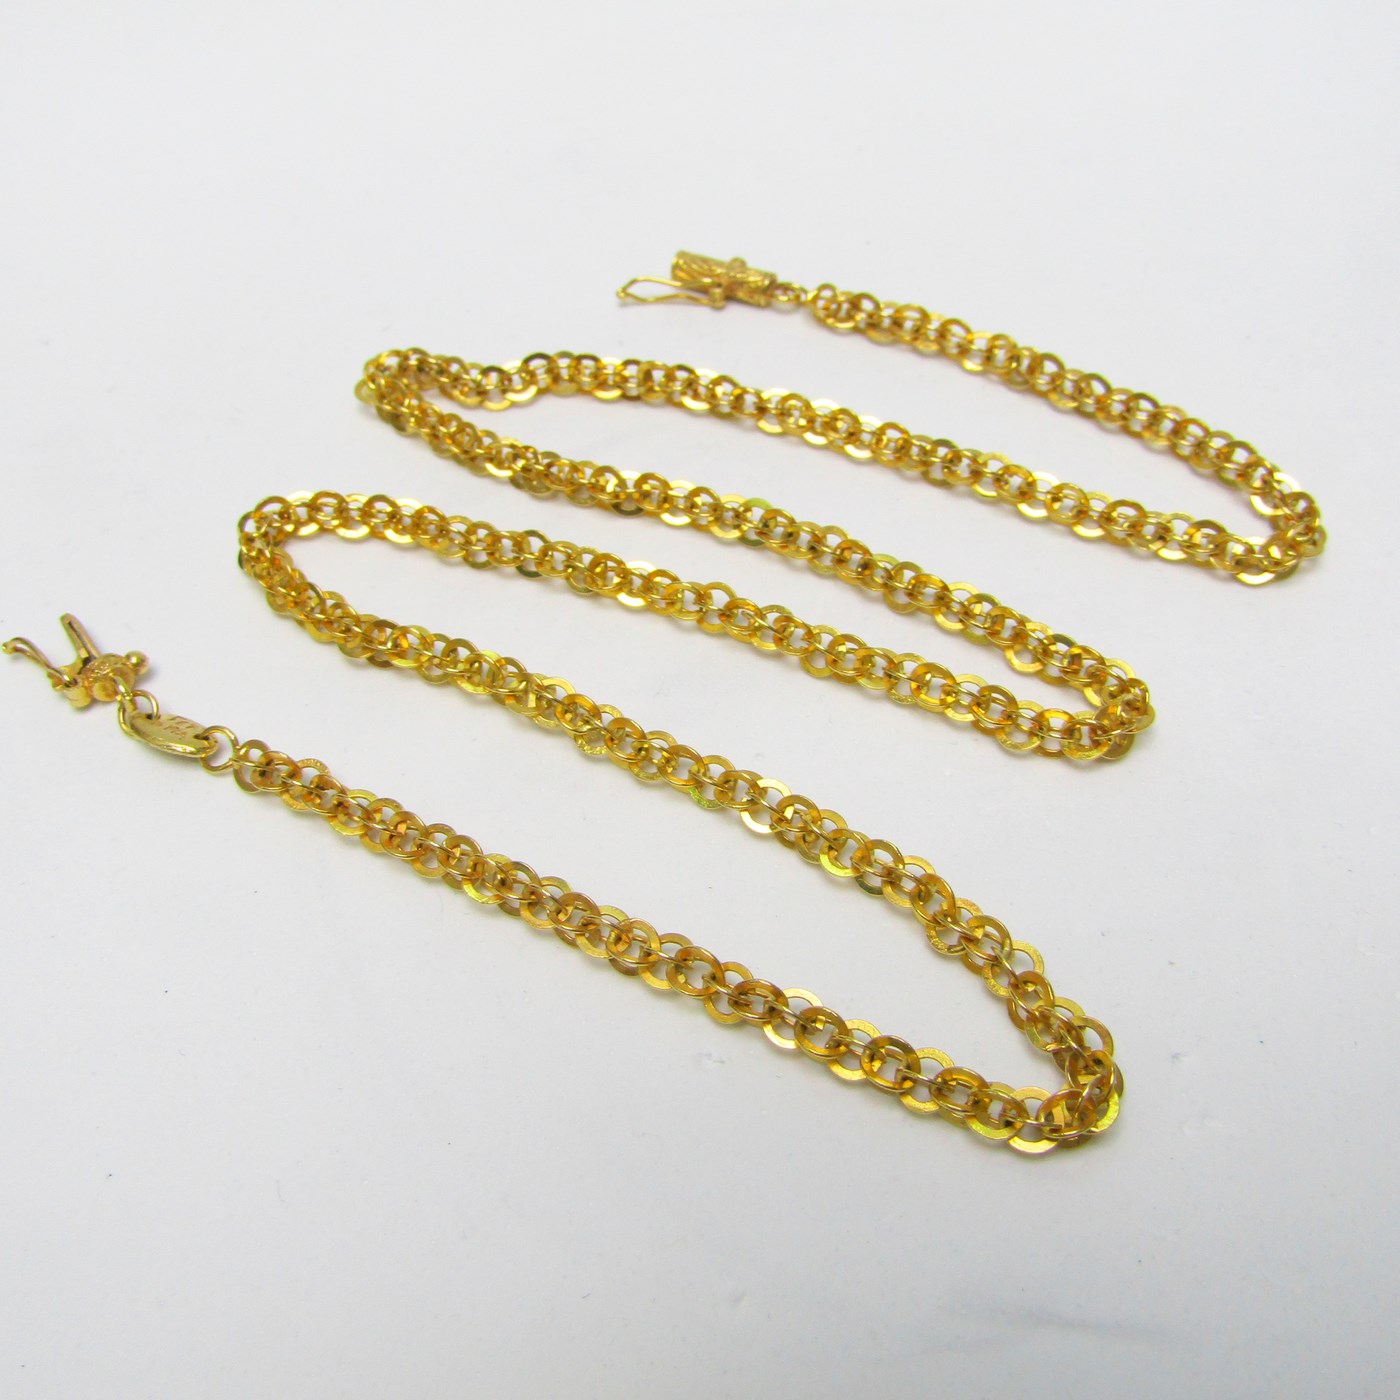 Consejo distorsión encanto Necklace - Chain with interlocking links in 18k Gold. 19,40 GR. Figaro  Auctions